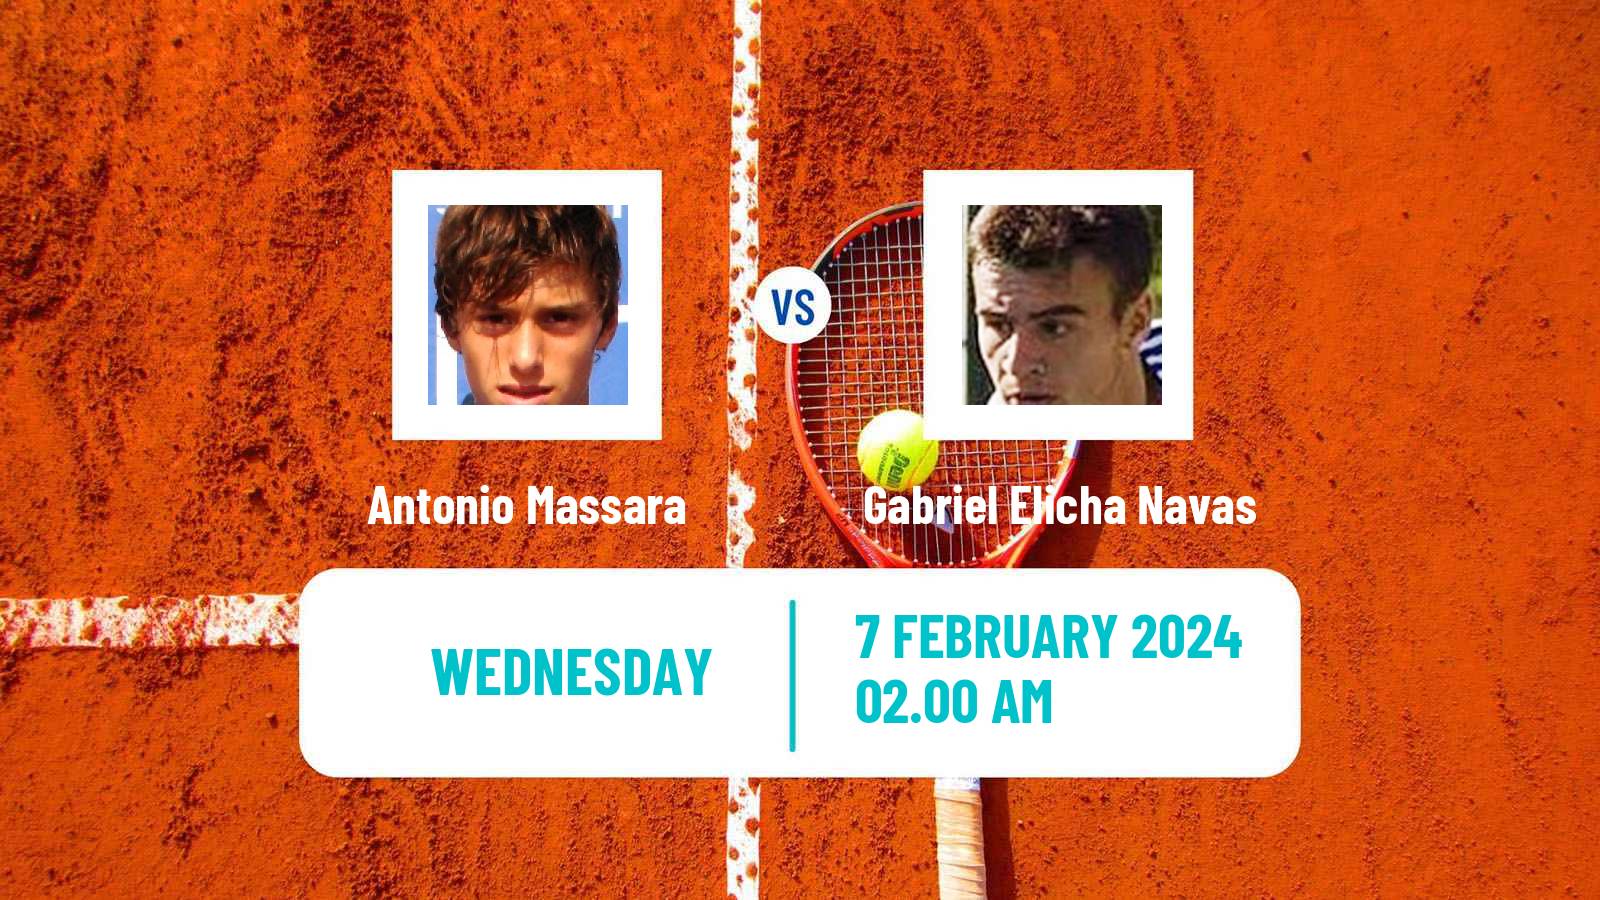 Tennis ITF M25 Antalya 2 Men Antonio Massara - Gabriel Elicha Navas